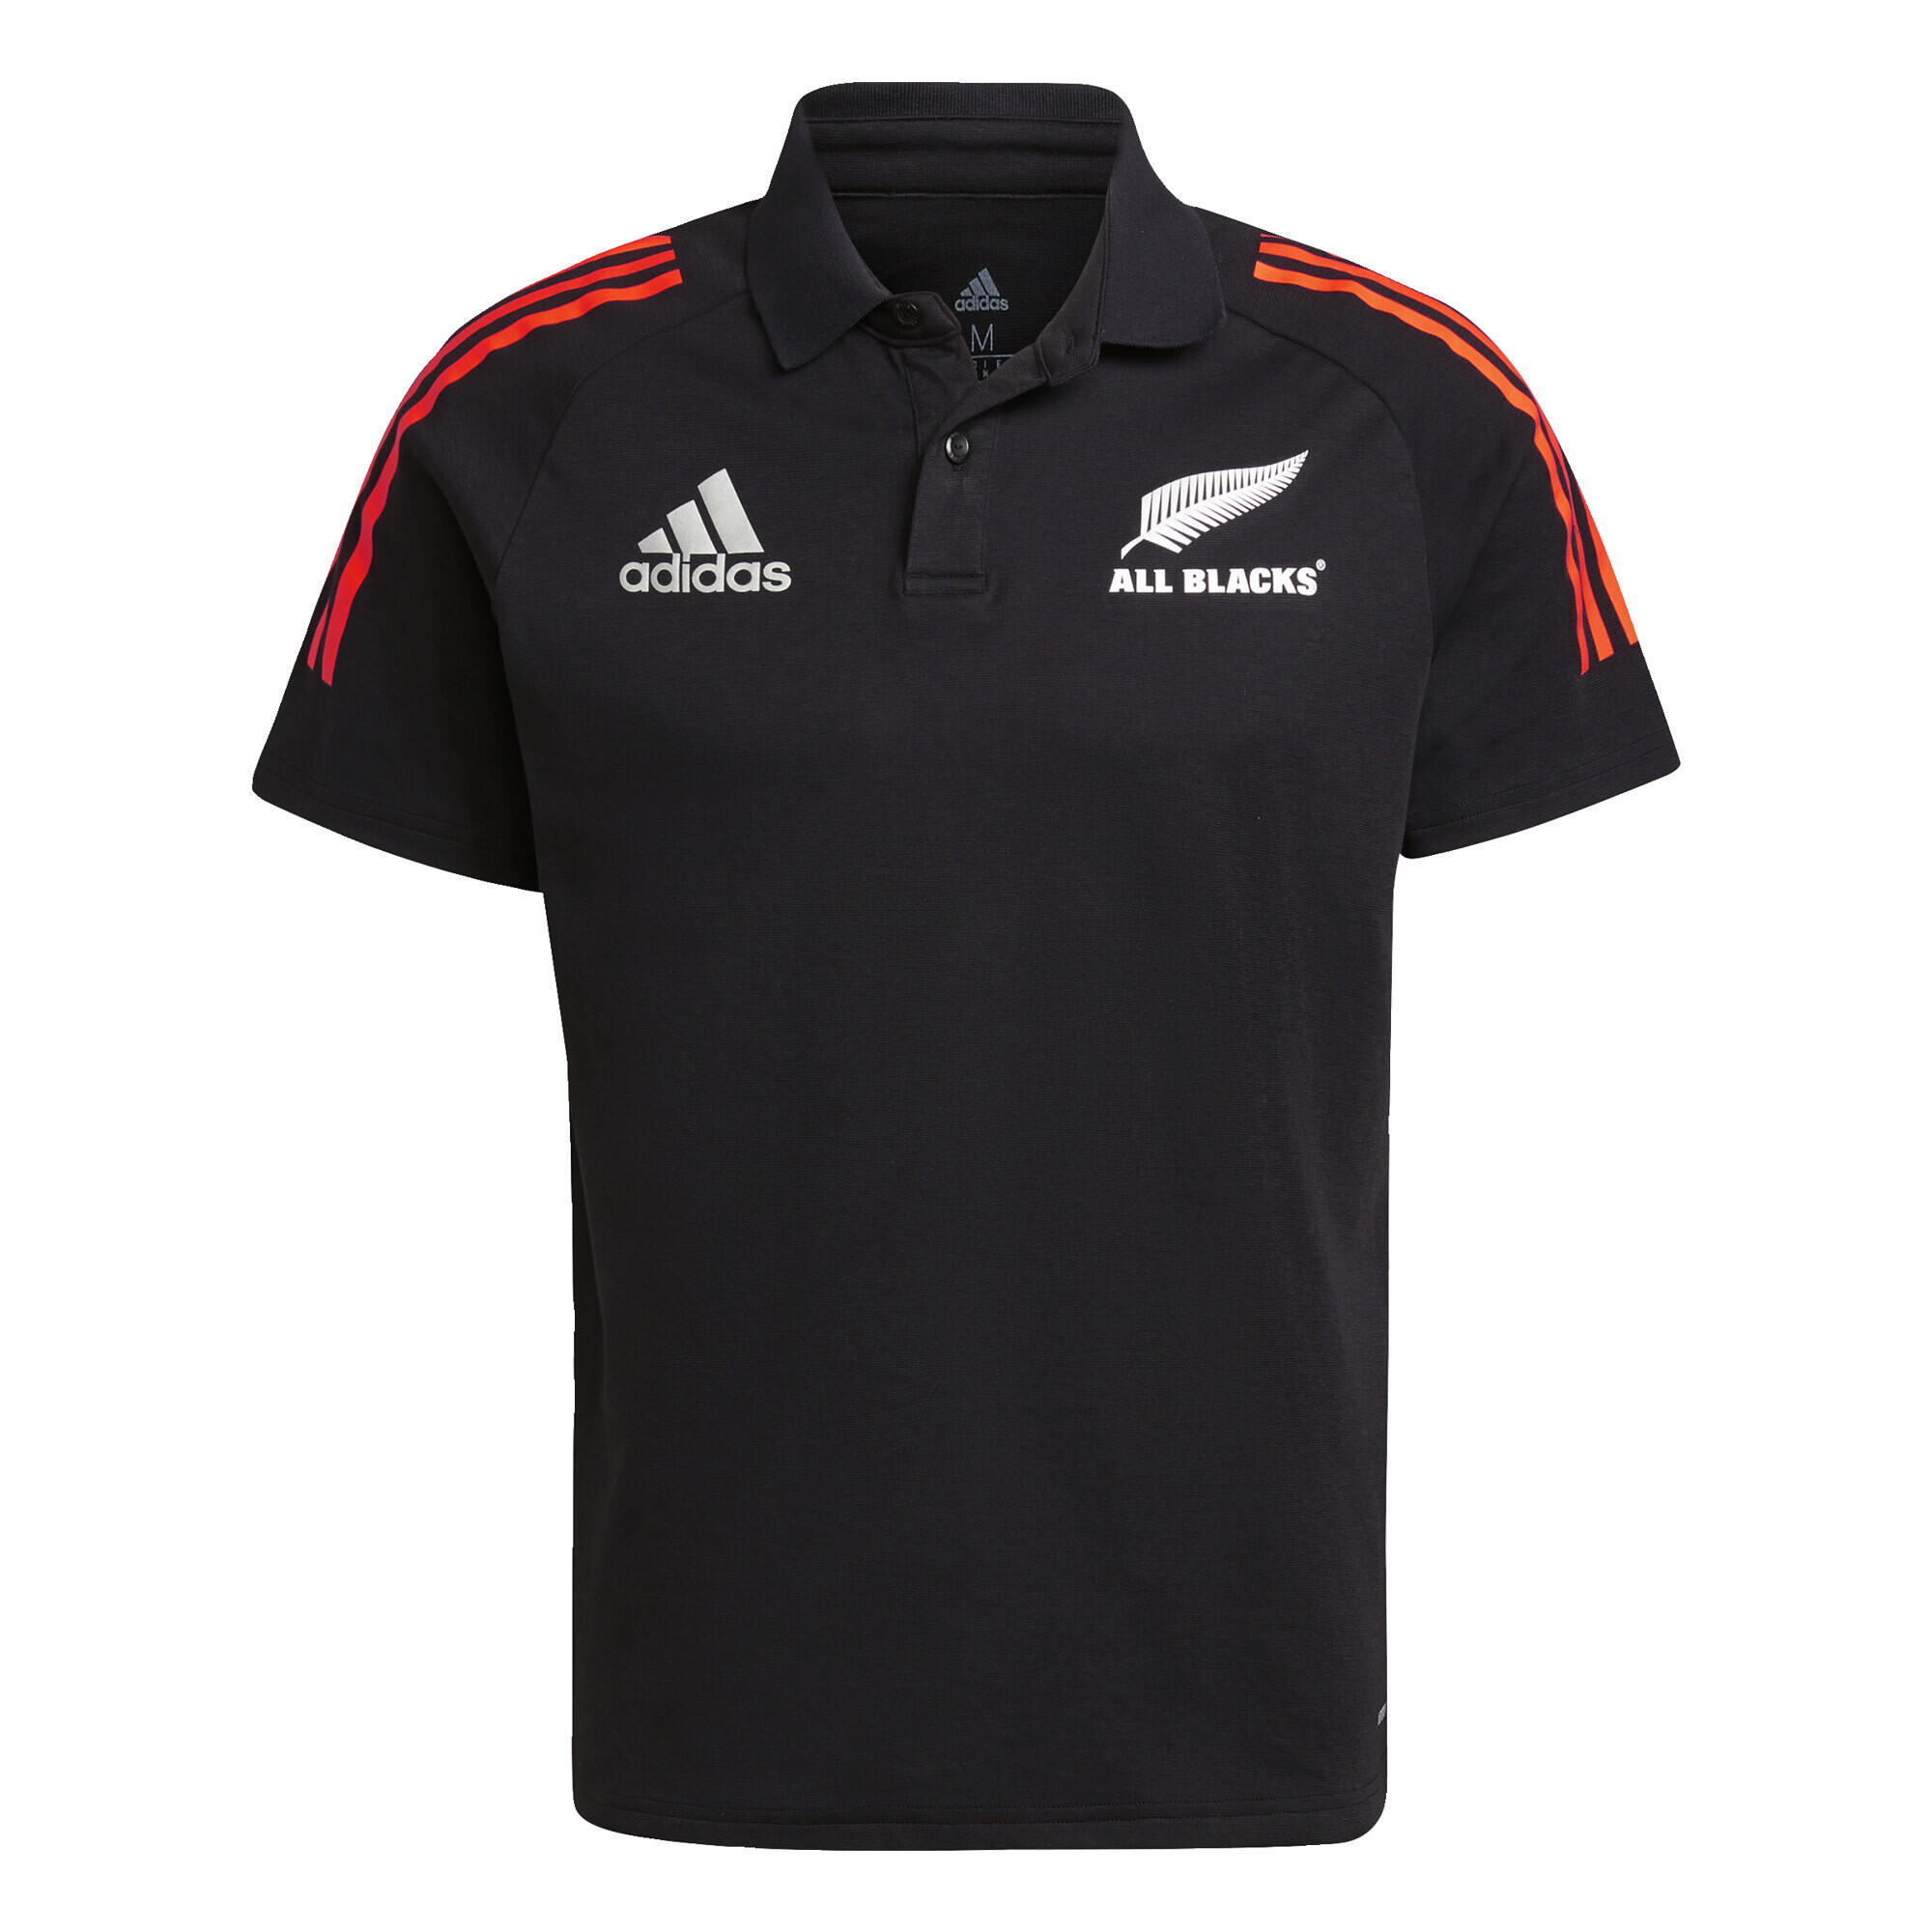 All Blacks Primeblue Rugby Polo Shirt 3/5